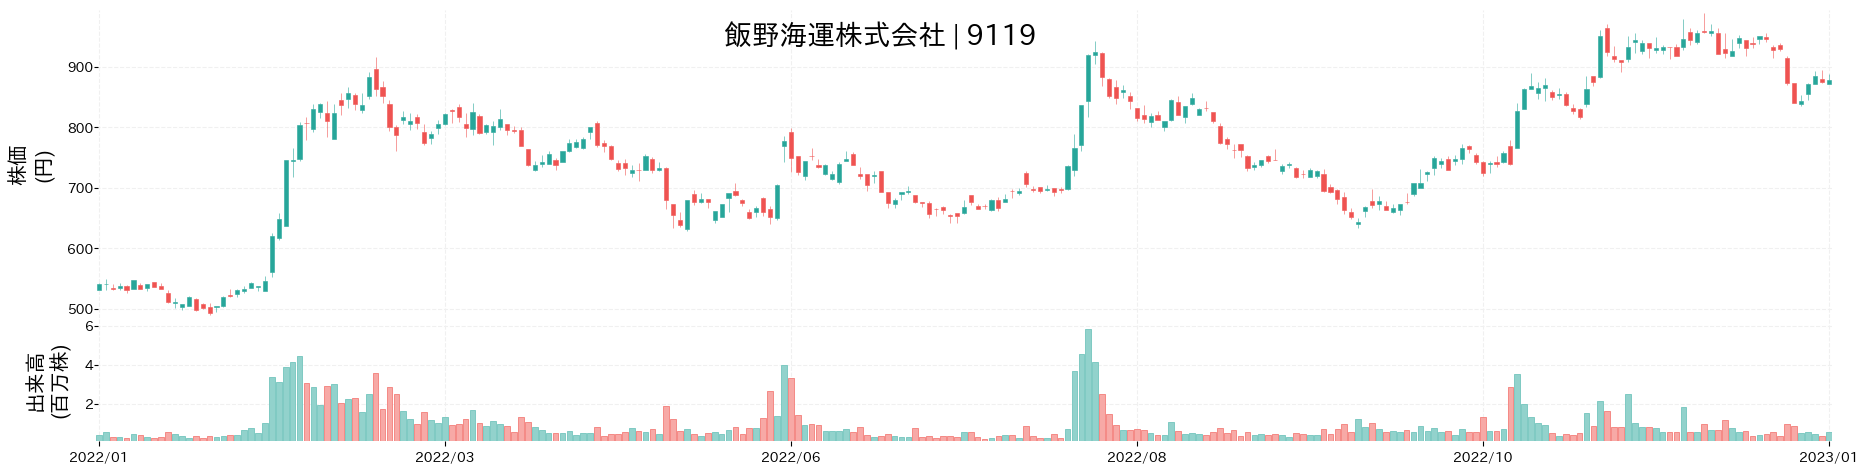 飯野海運の株価推移(2022)